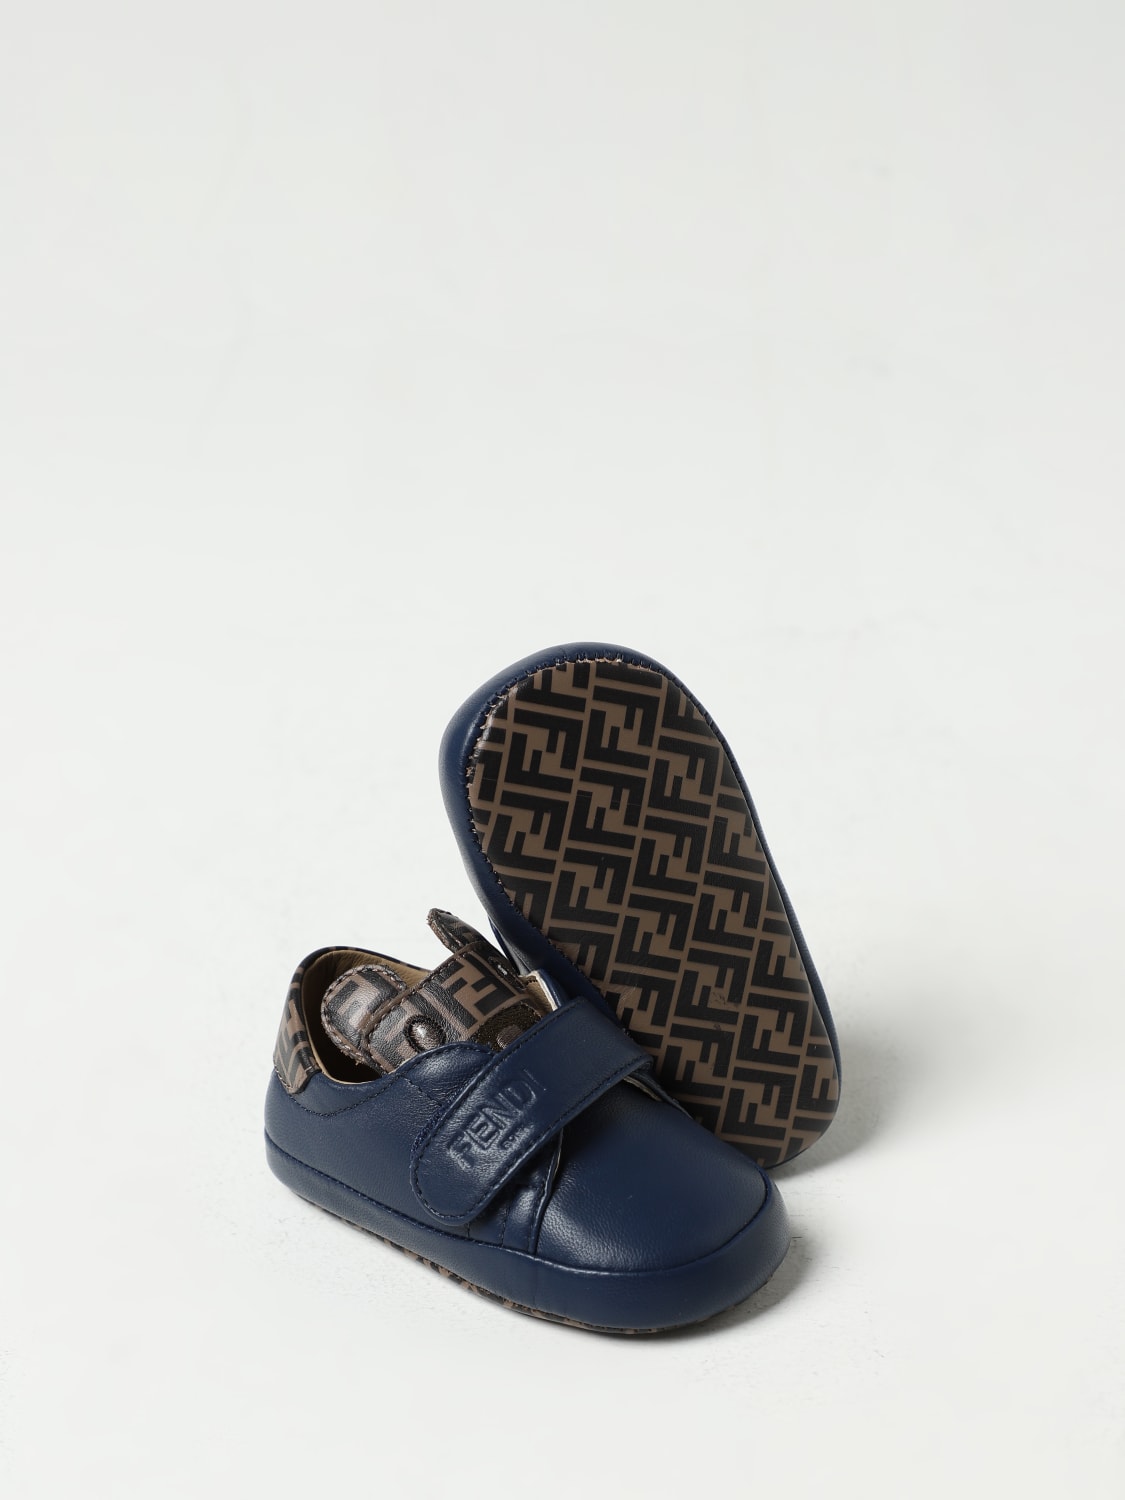 Fendi baby shoes